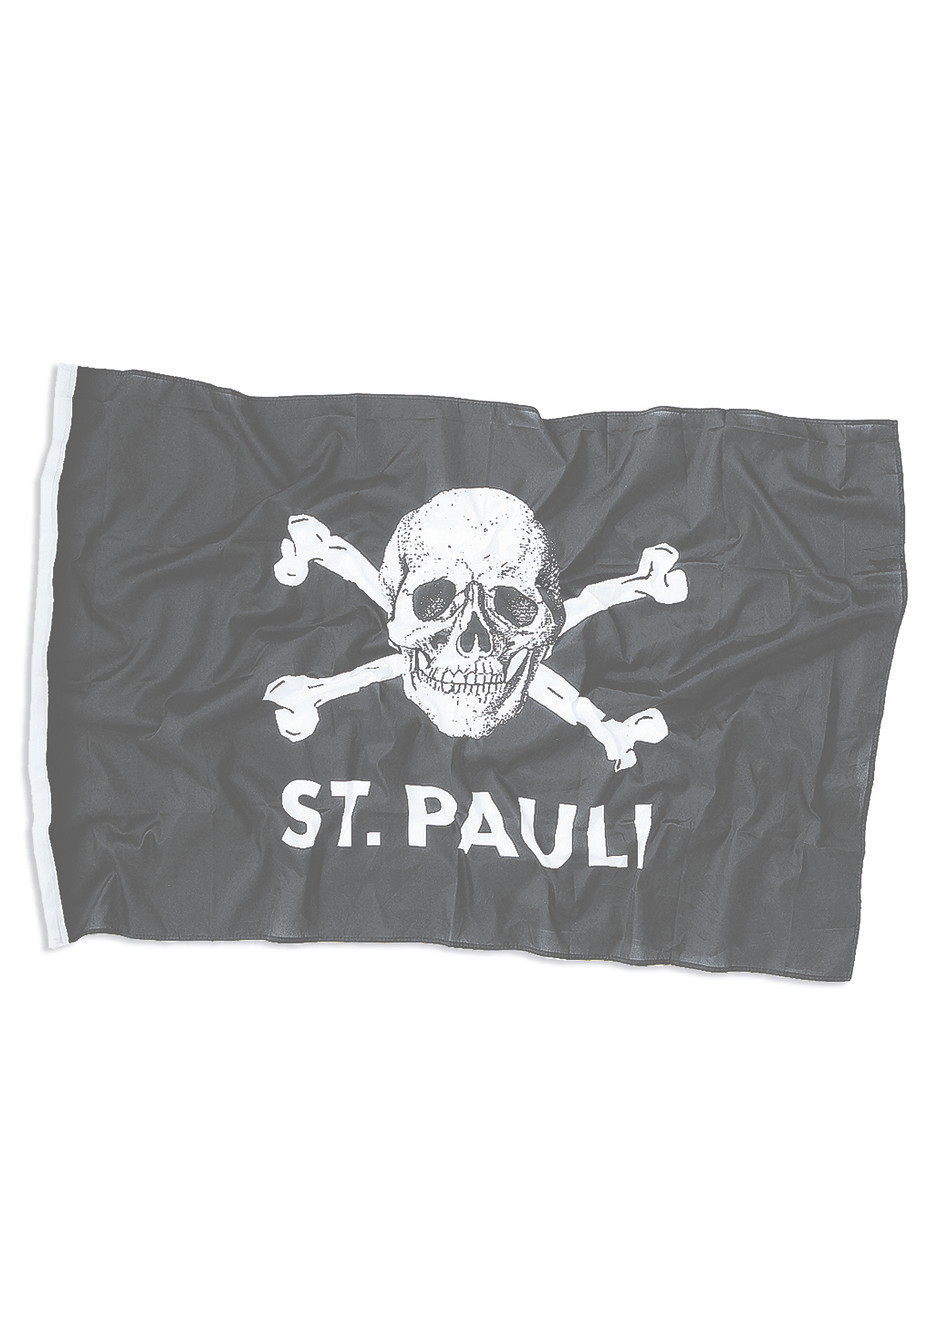 Skull and crossbones flag, small (30x40cm)